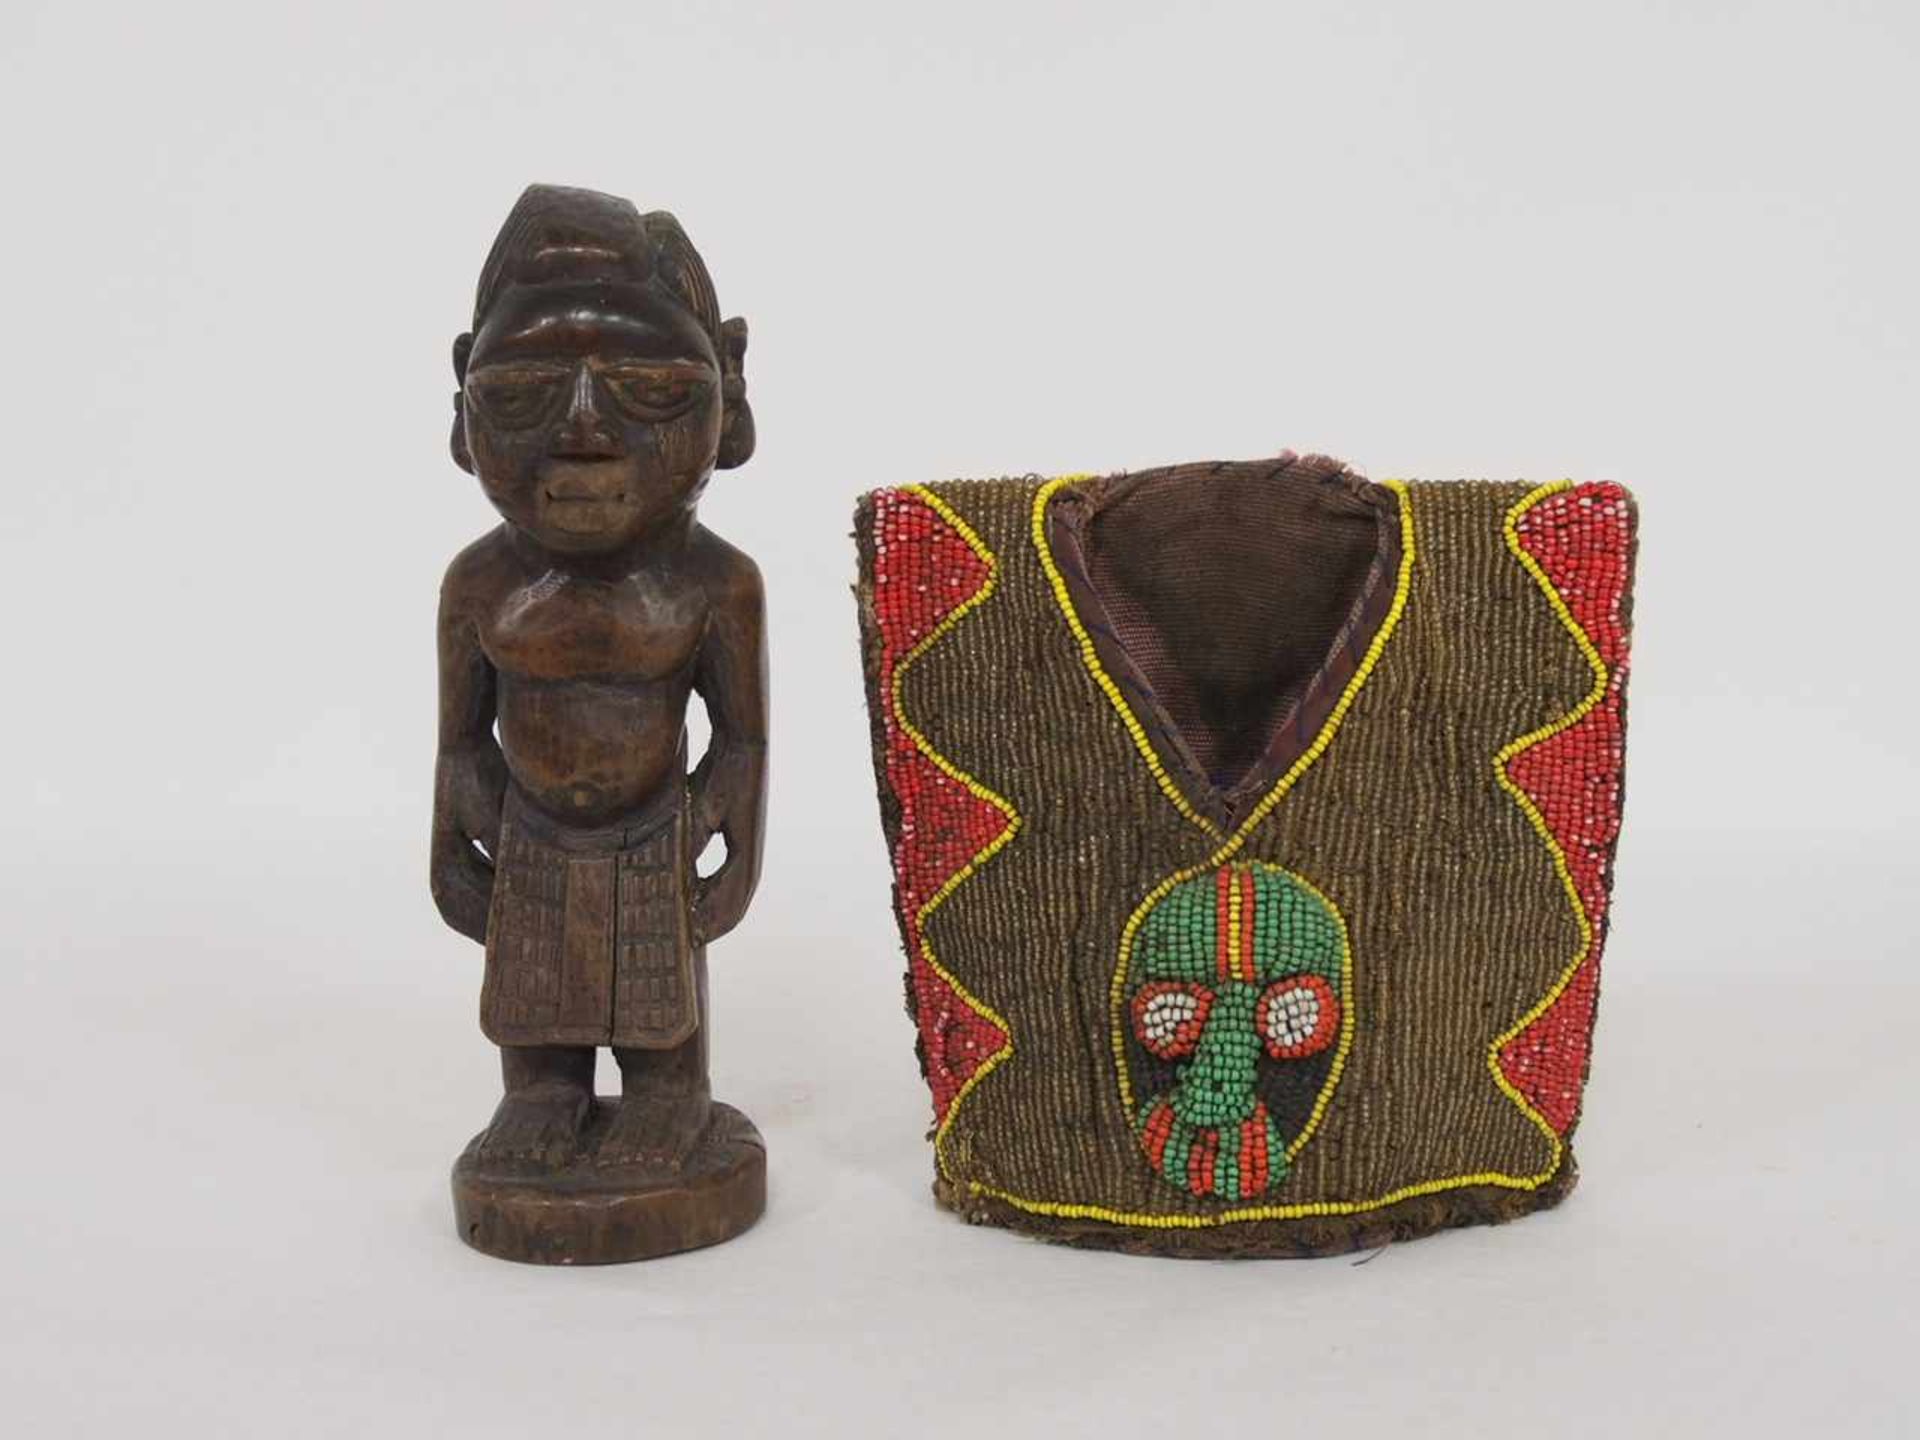 Einzelne ZwillingsfigurHolz, geschnitzt, Glasperlenhemd, Yoruba, Nigeria, Anfang 20. Jahrhundert, - Bild 2 aus 2